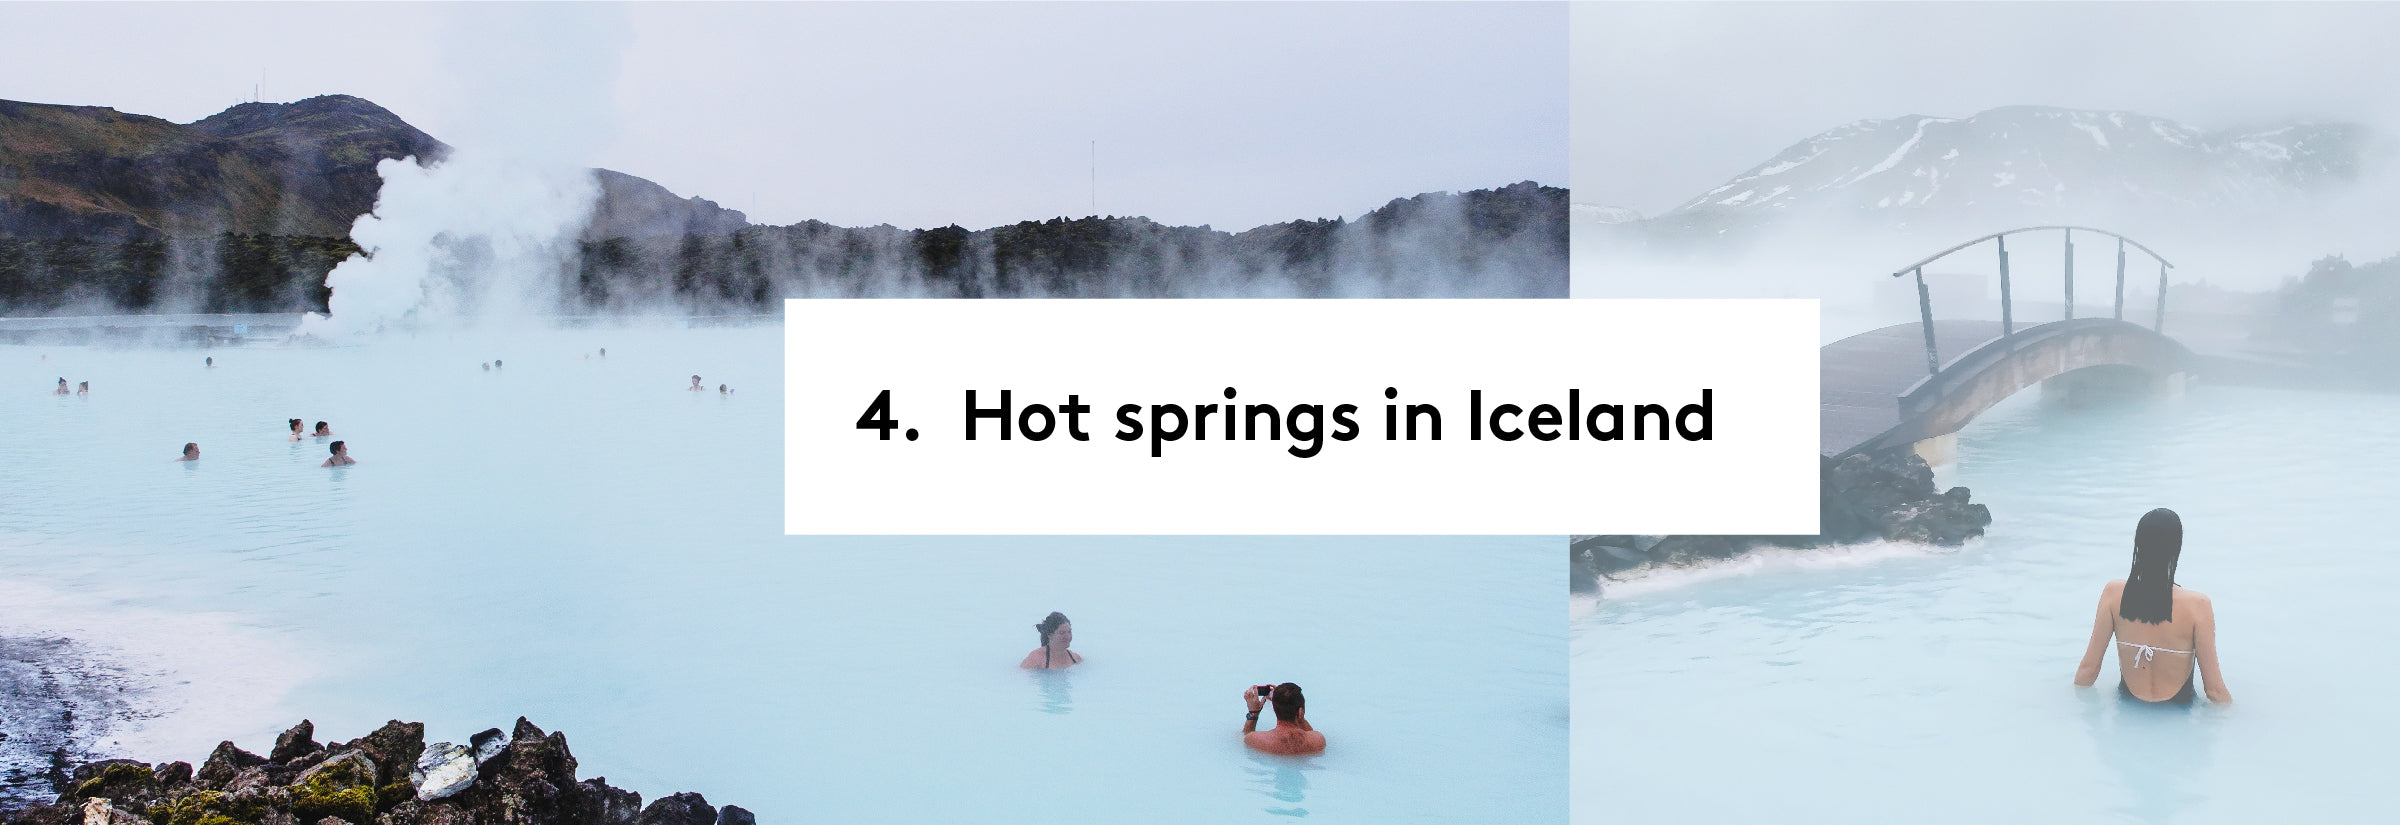 4. Hot Springs in Iceland